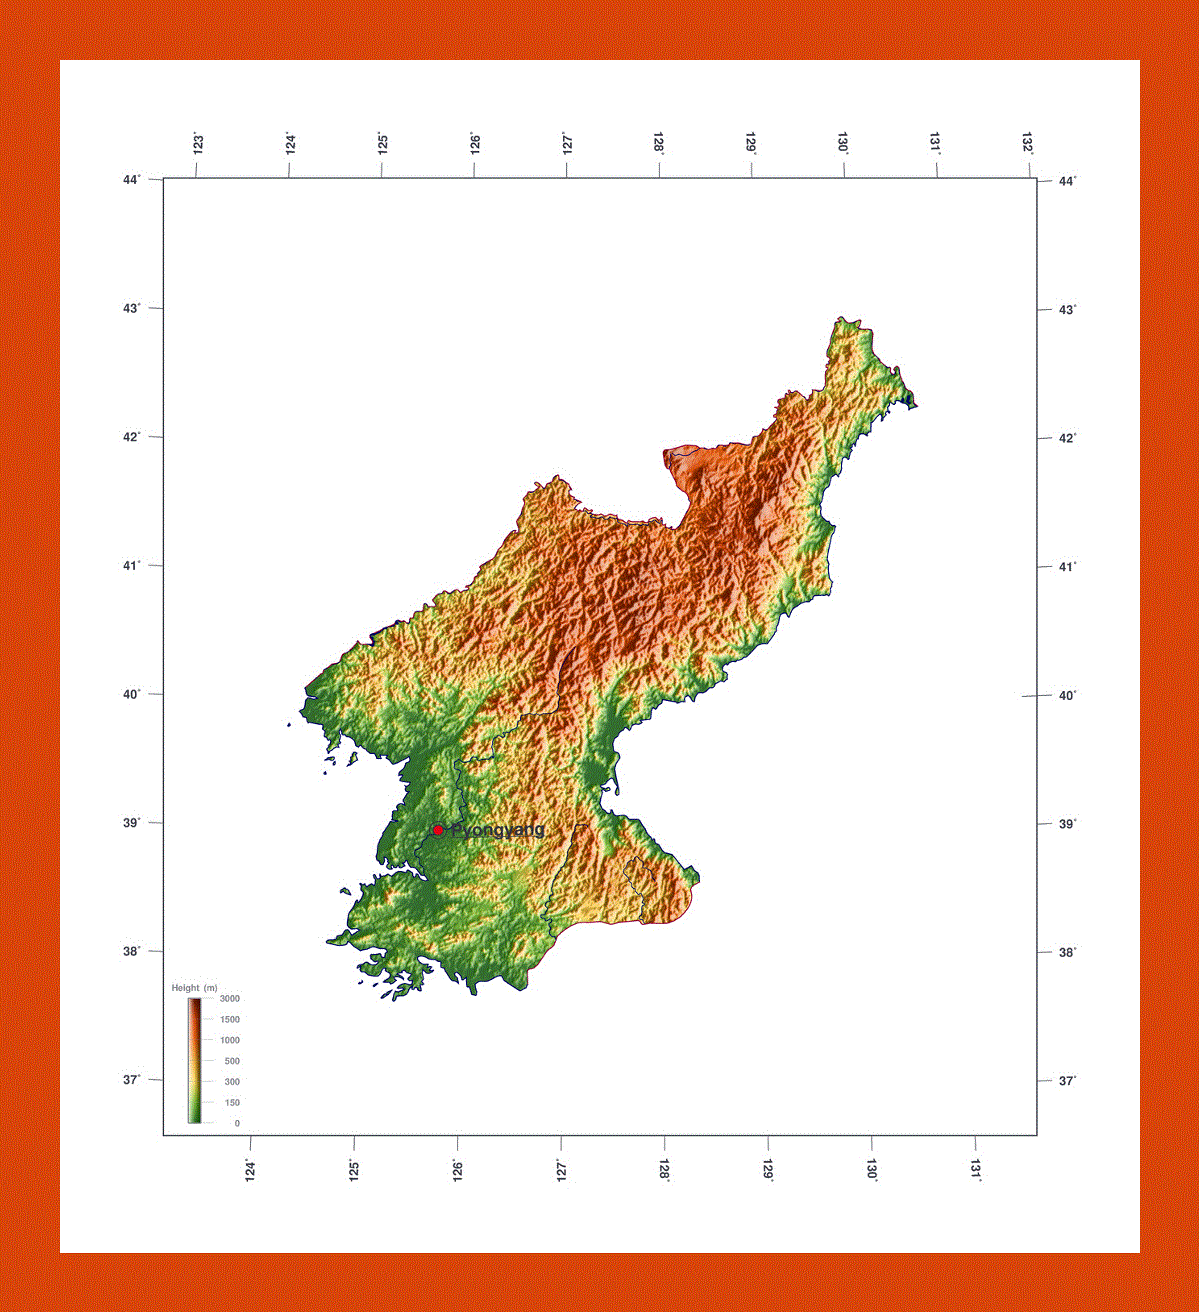 Elevation map of North Korea